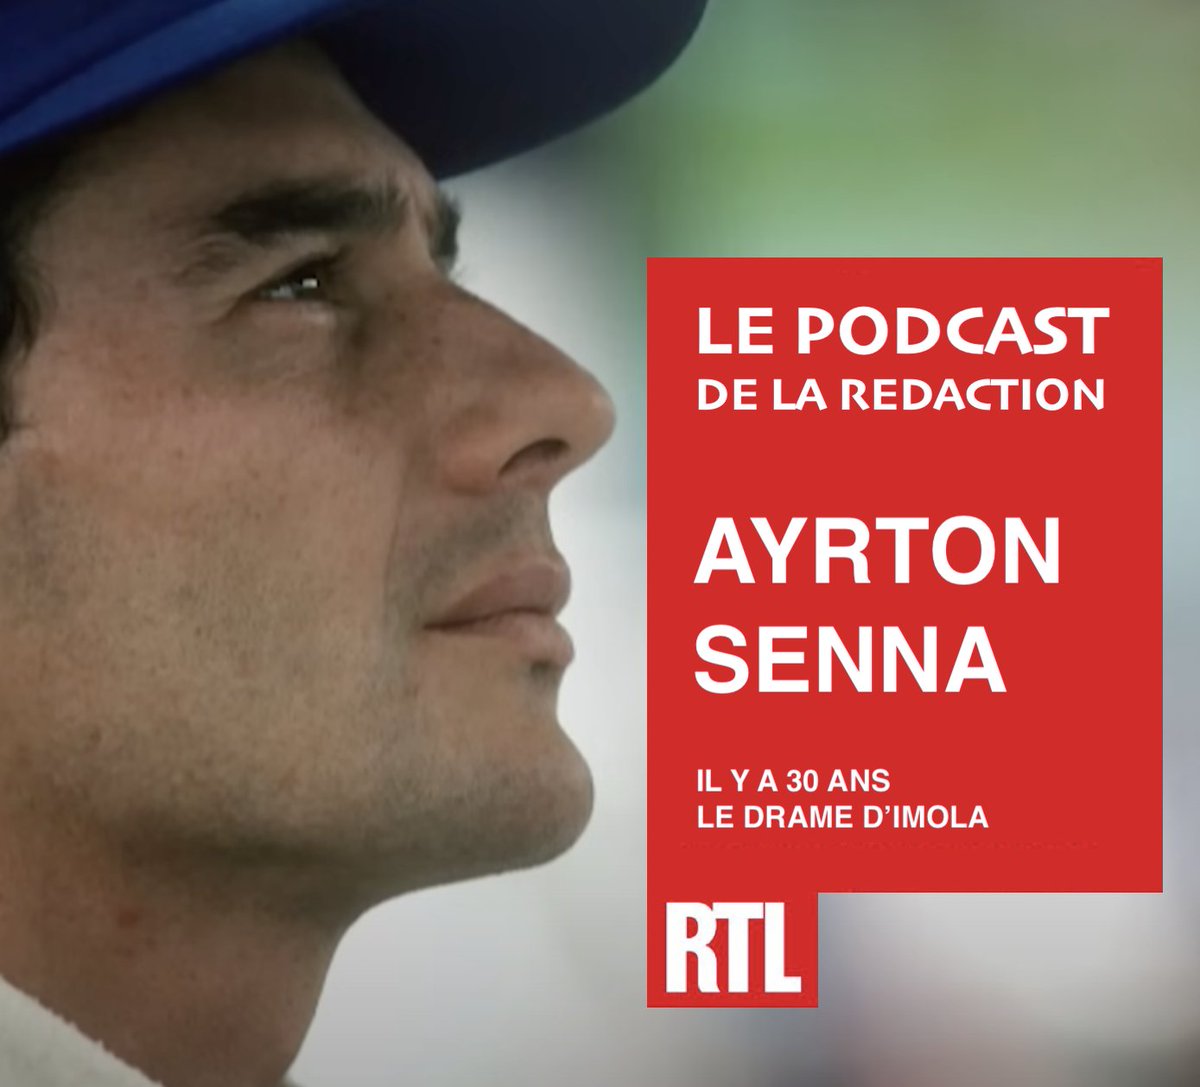 PODCAST : il y a 30 ans, Ayrton Senna ... Imola .. Retour sur le pire week-end que la Formule 1 a connu rtl.fr/sport/autres-s… @RTLFrance #AyrtonSenna #Senna #F1 #podcast